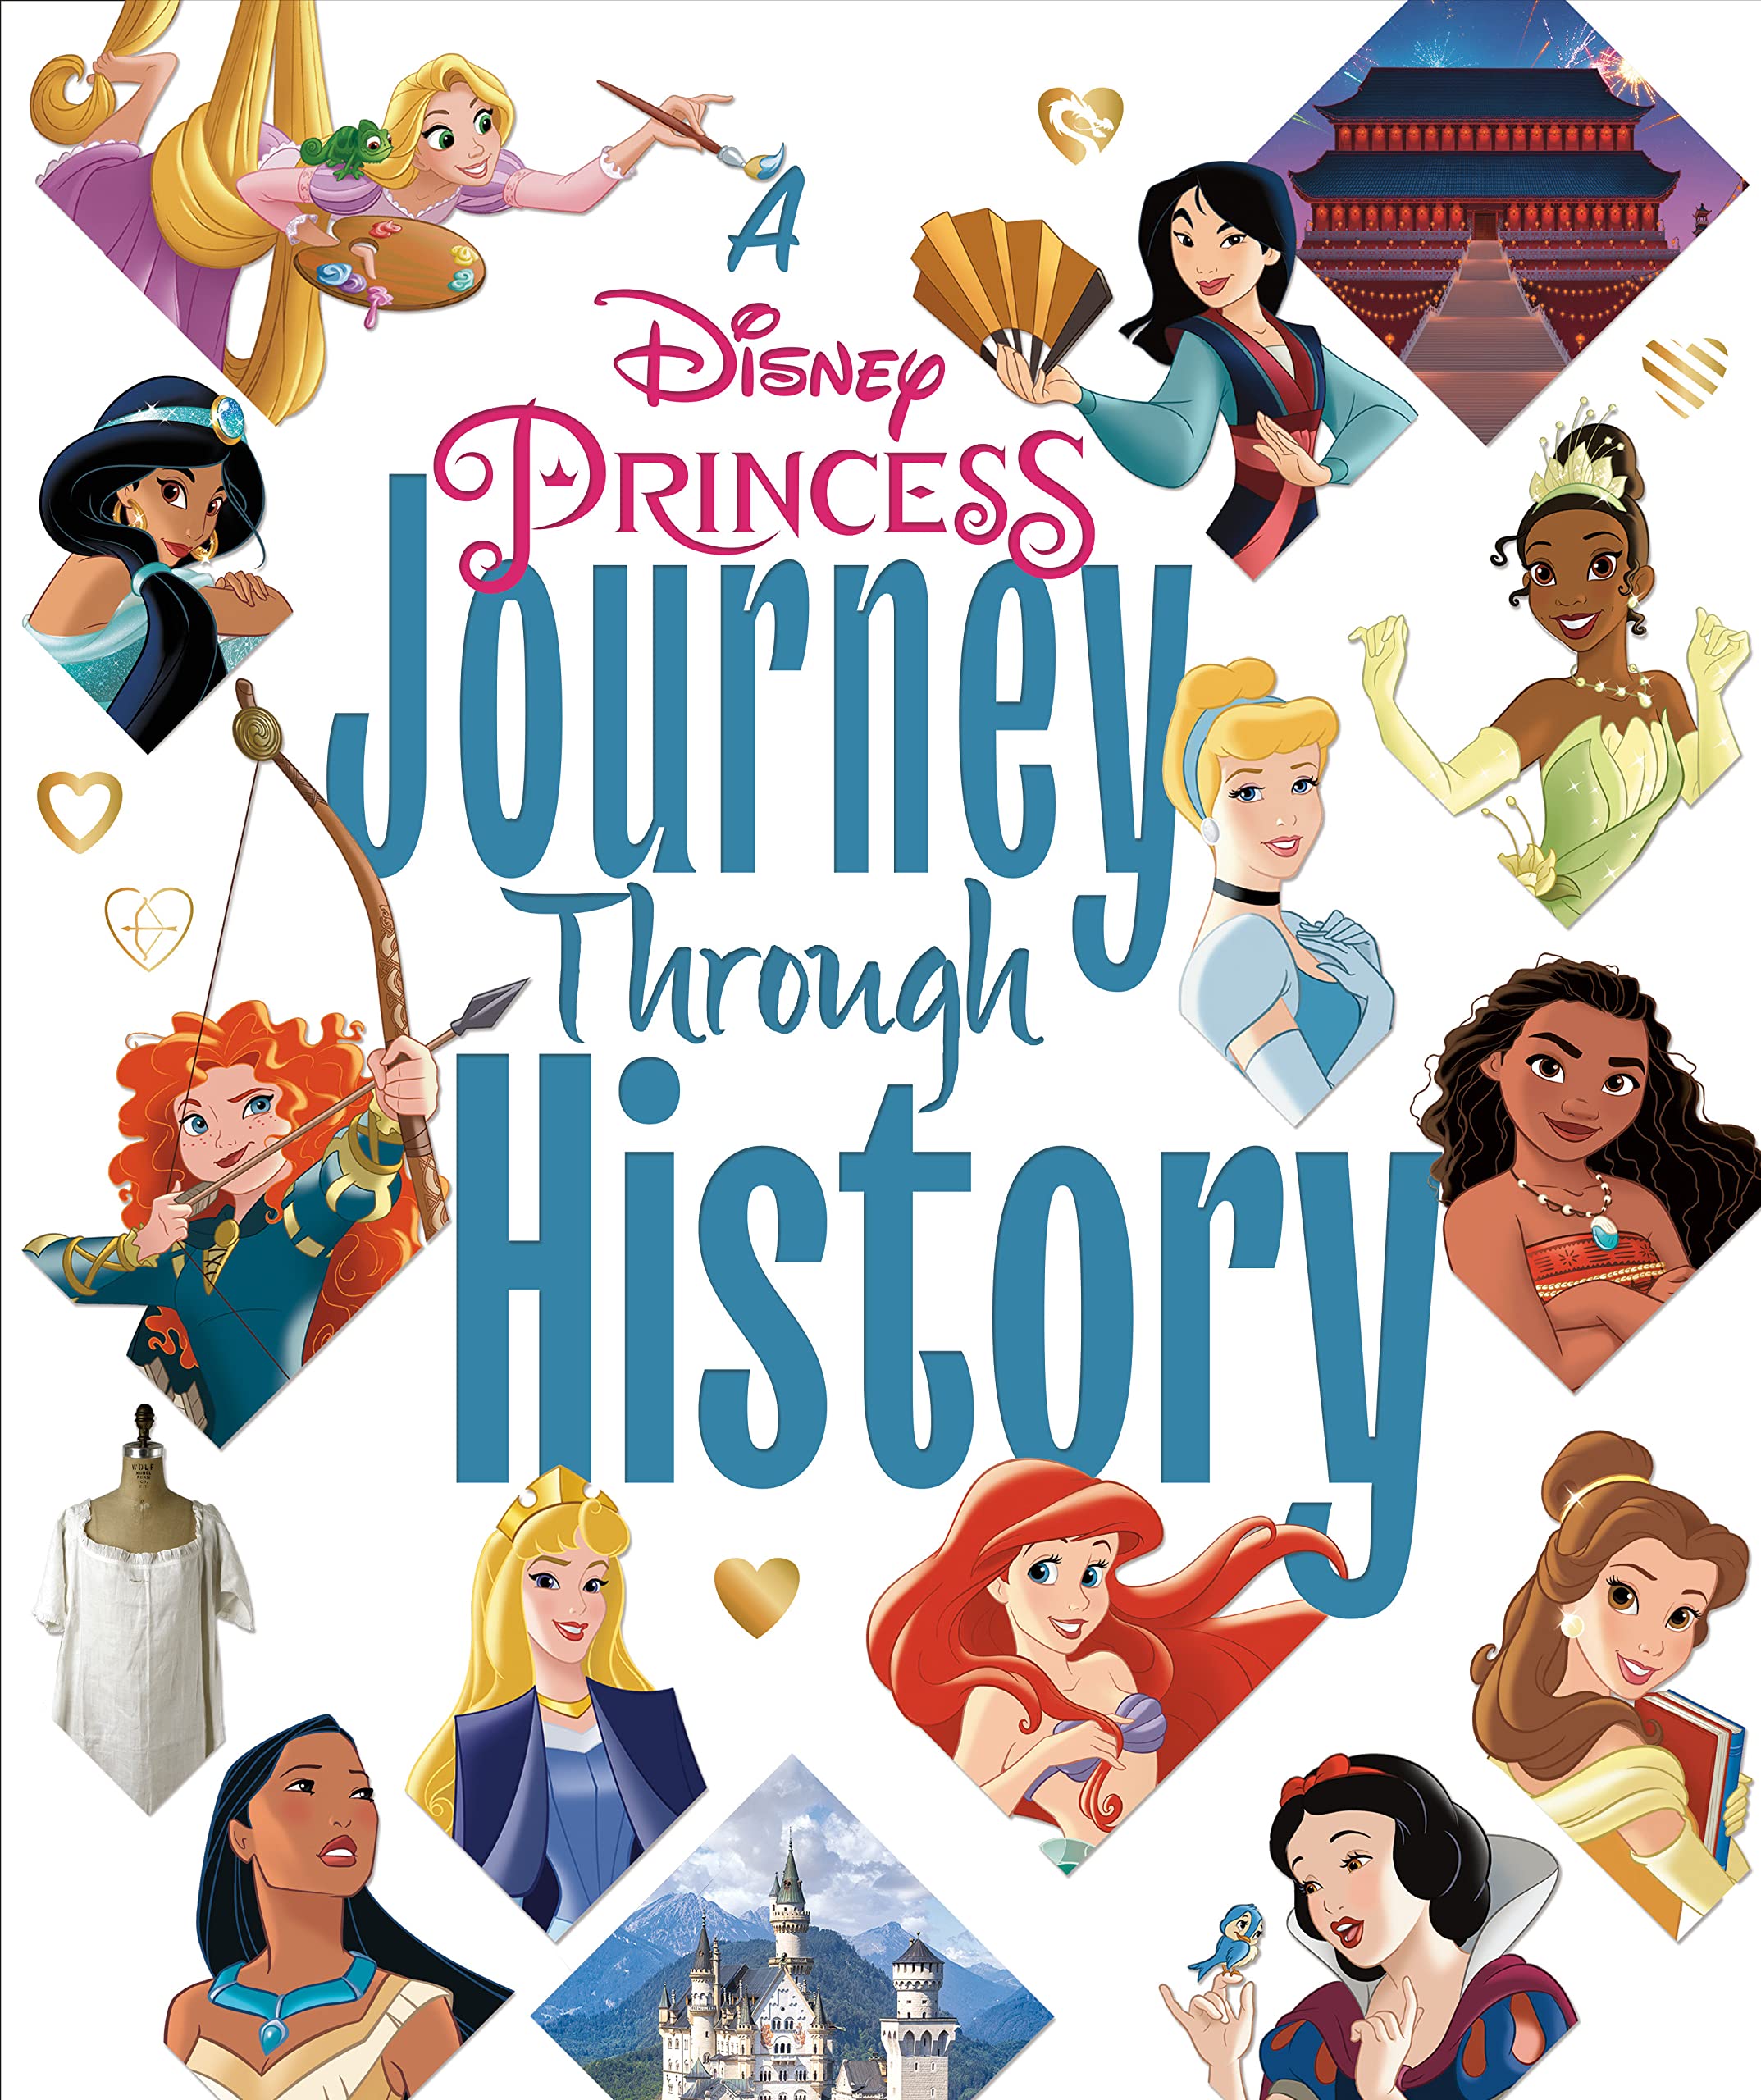 https://static.wikia.nocookie.net/disney/images/b/ba/A_Disney_Princess_Journey_Through_History.jpg/revision/latest?cb=20230320005005